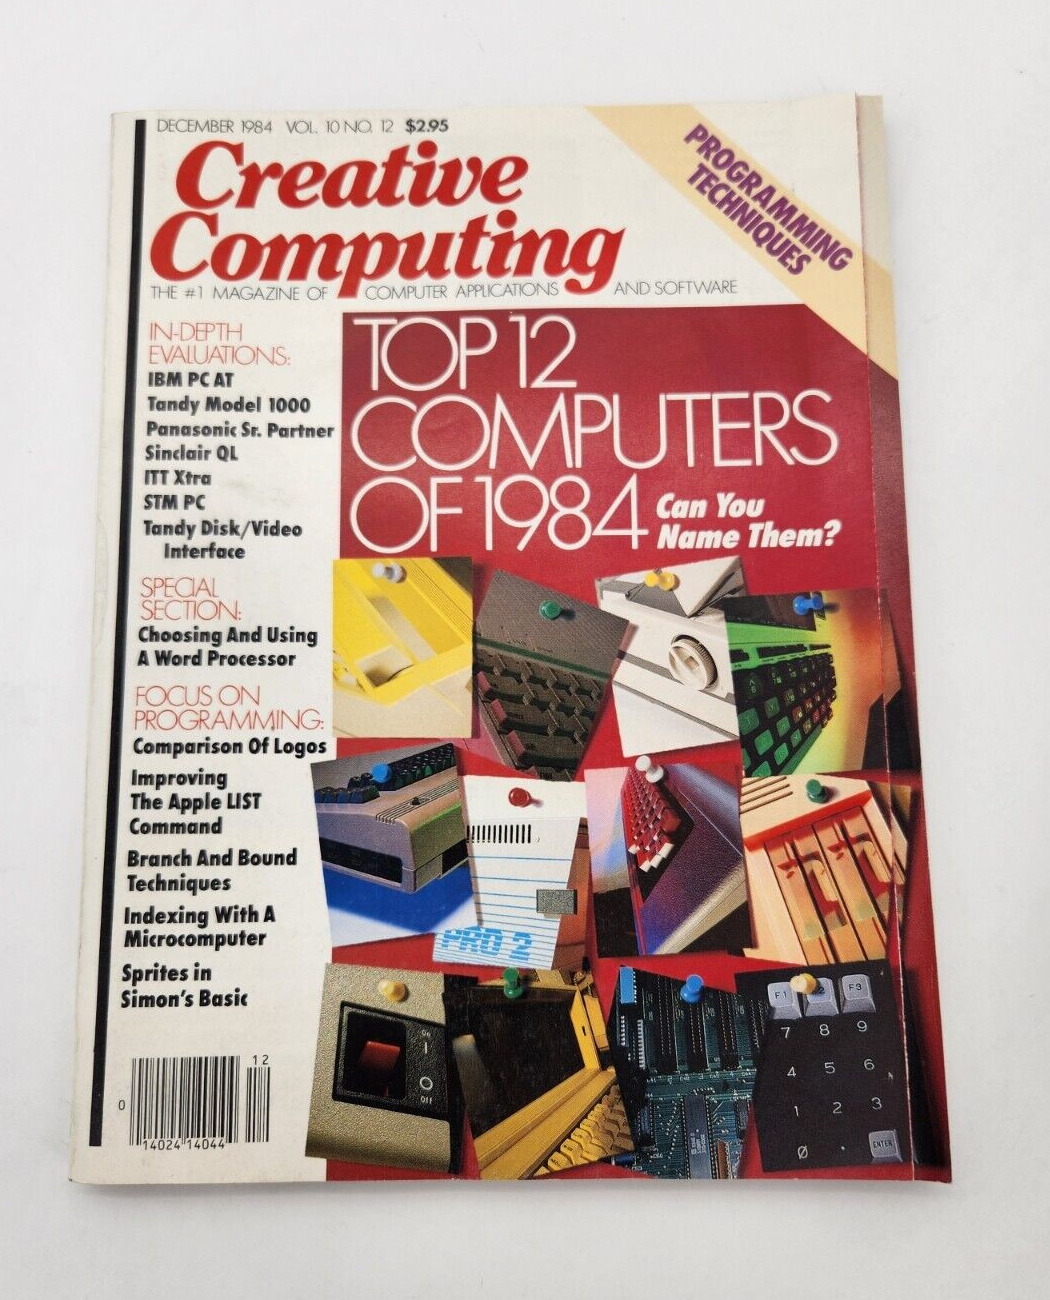 Vintage Creative Computing Magazine, December 1984 Volume 10 Number 12